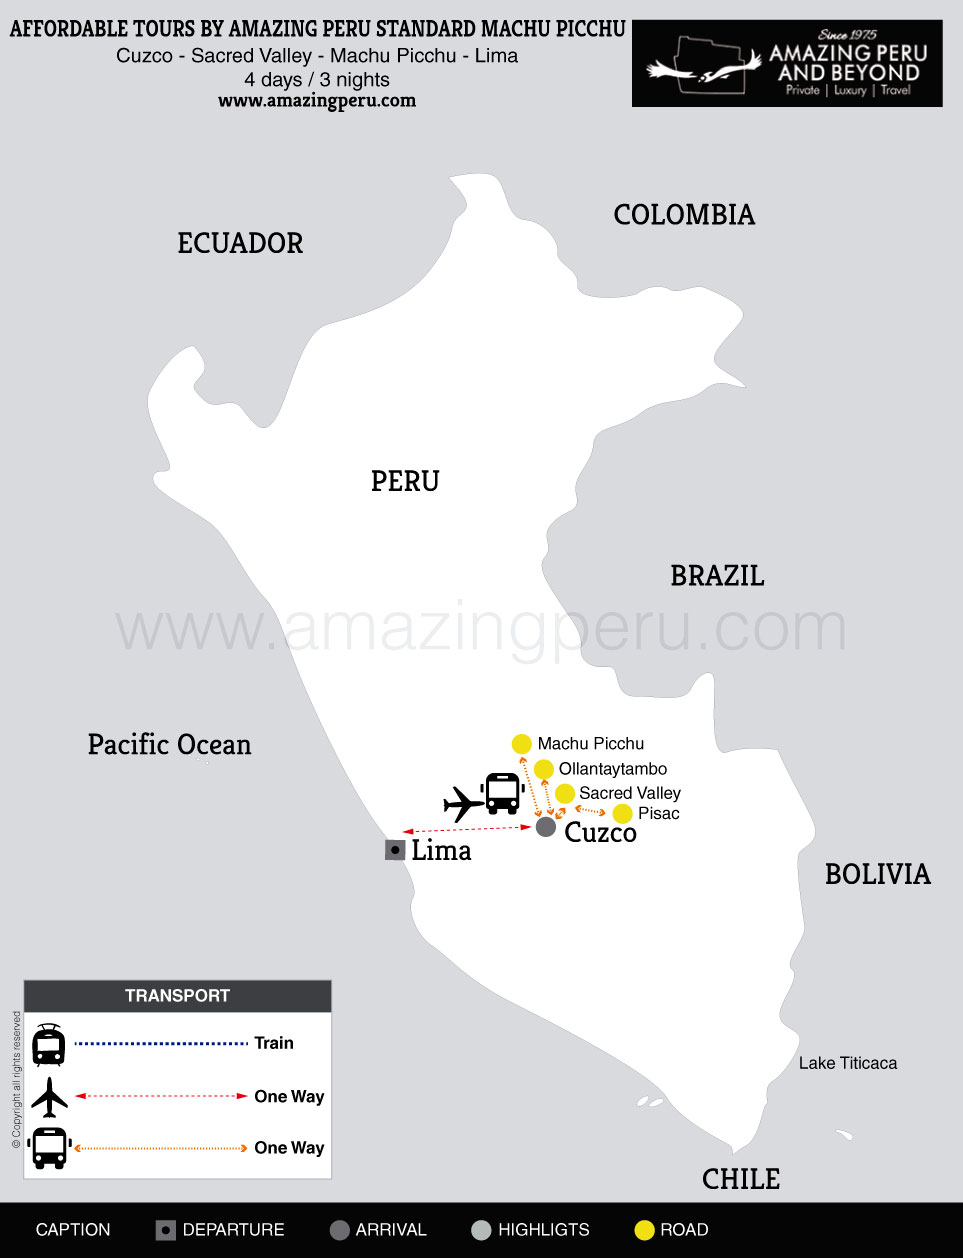 2023 Affordable Tours by Amazing Peru Standard Machu Picchu - 4 days / 3 nights.